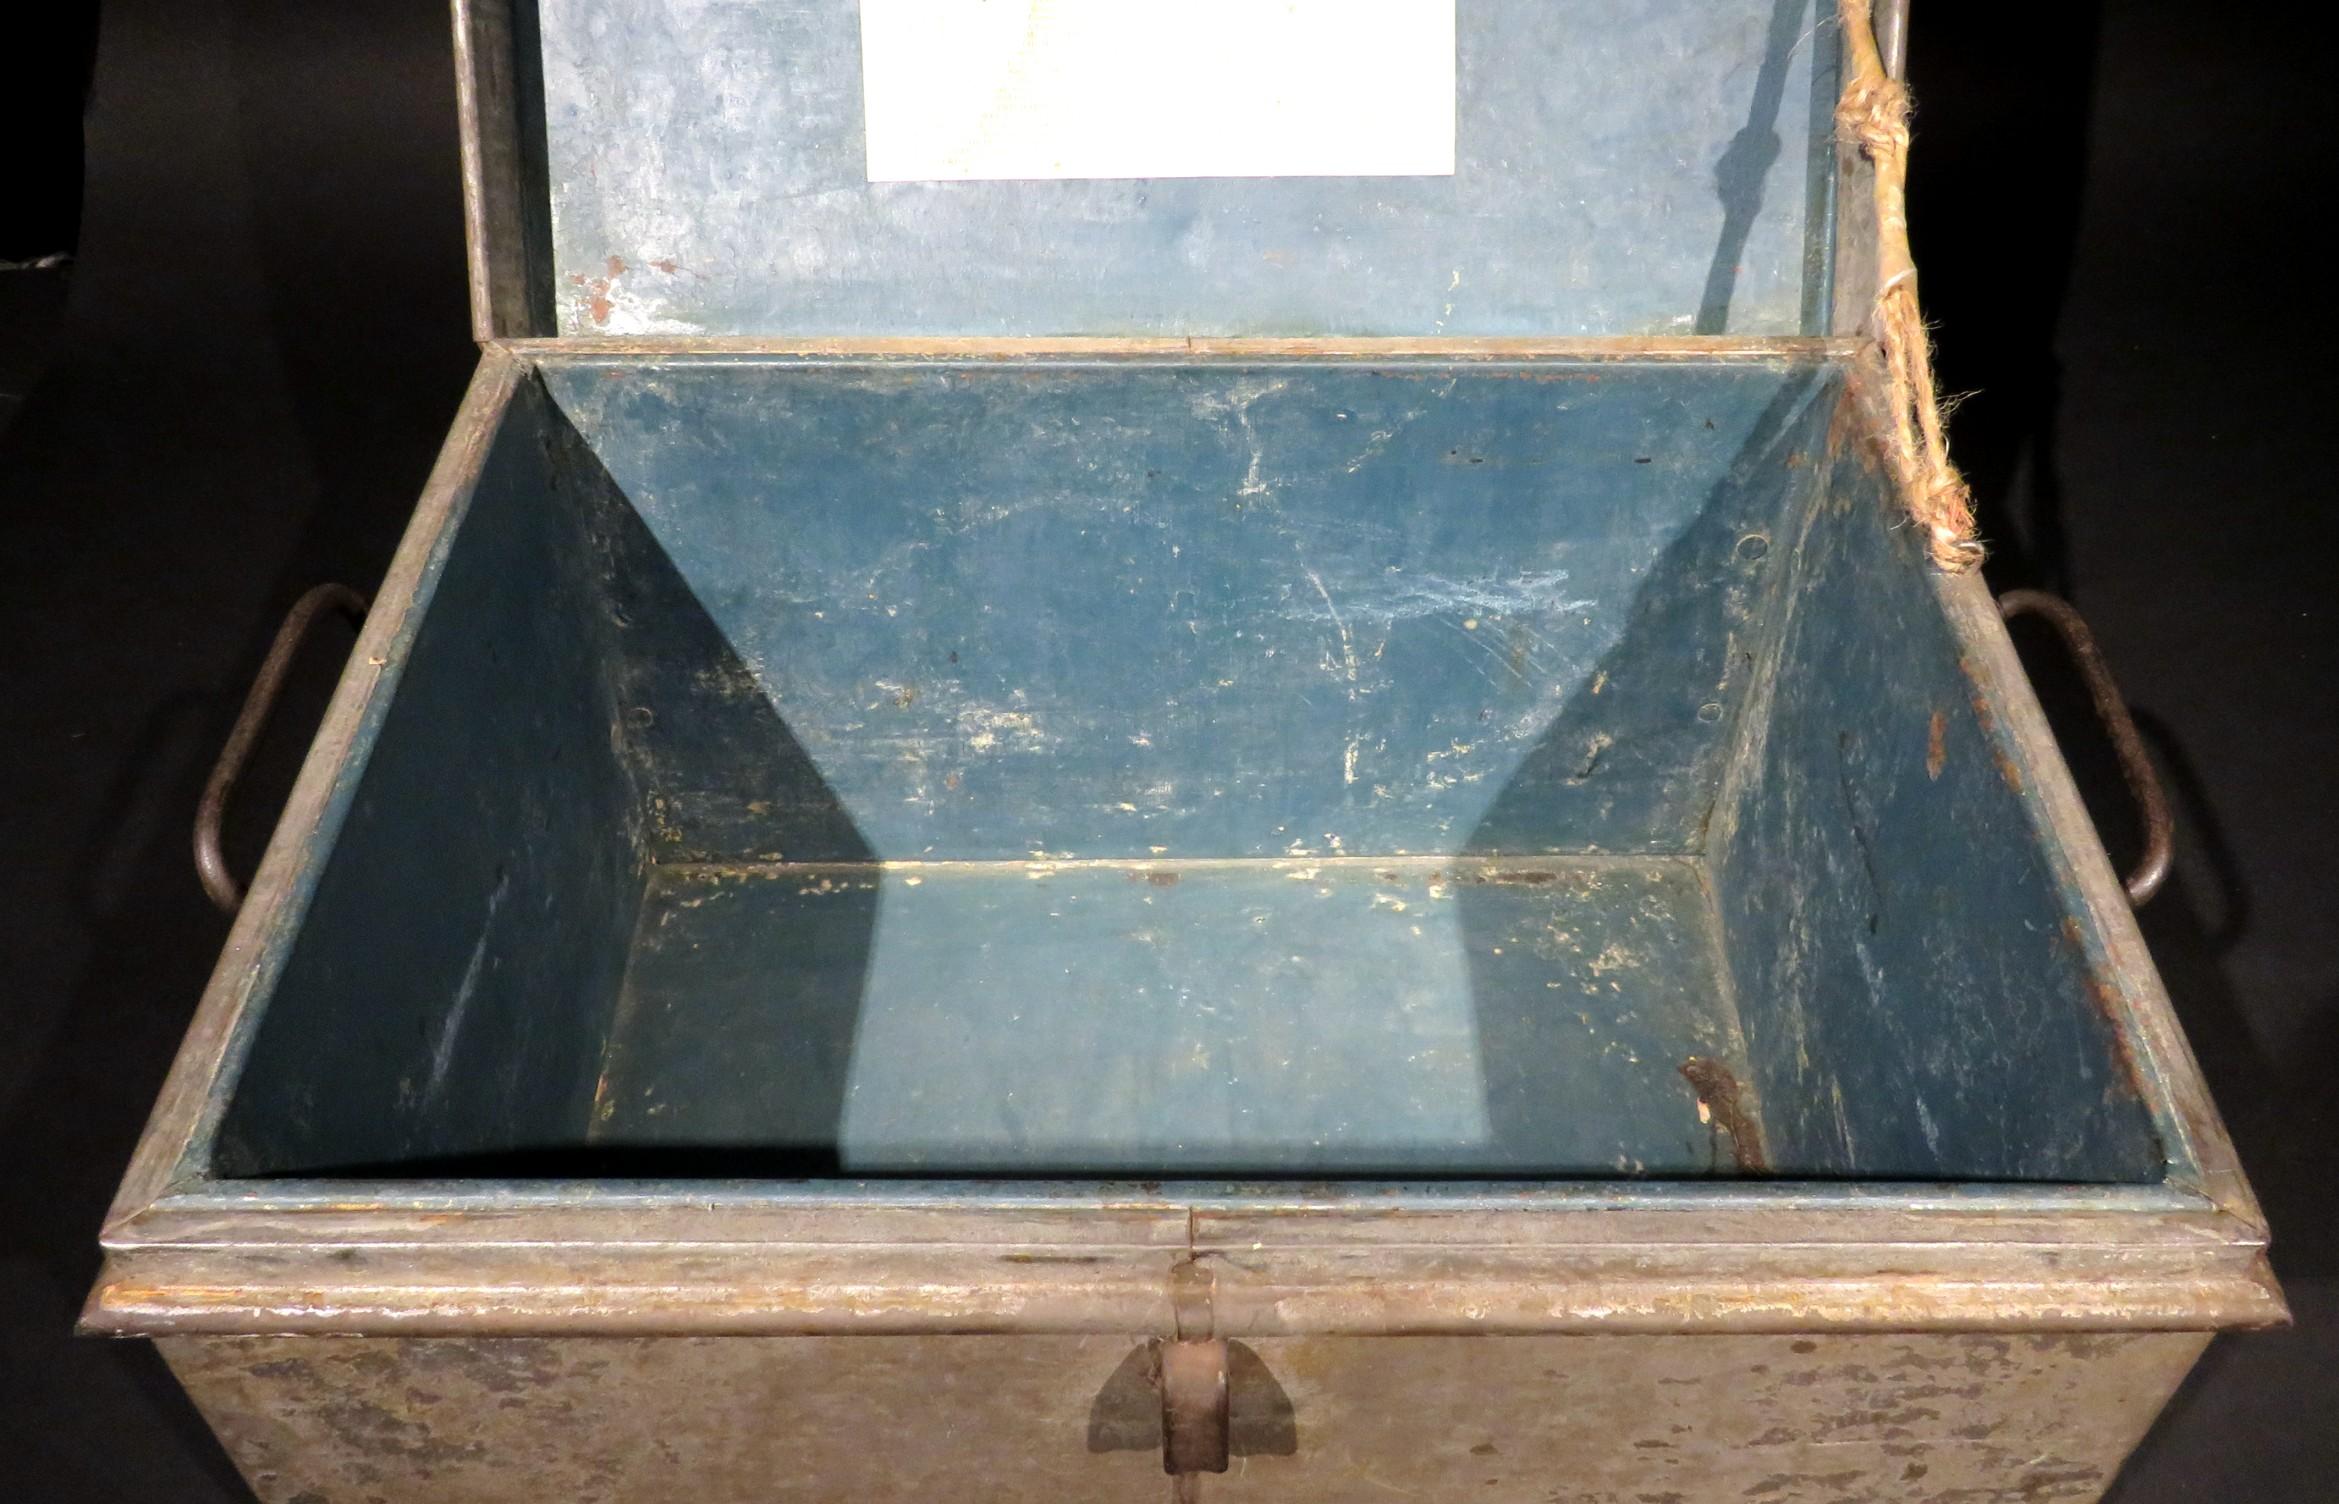 Metalwork Authentic 19th Century Thomas Milner Patented Iron Safety Box, UK Circa 1840 For Sale